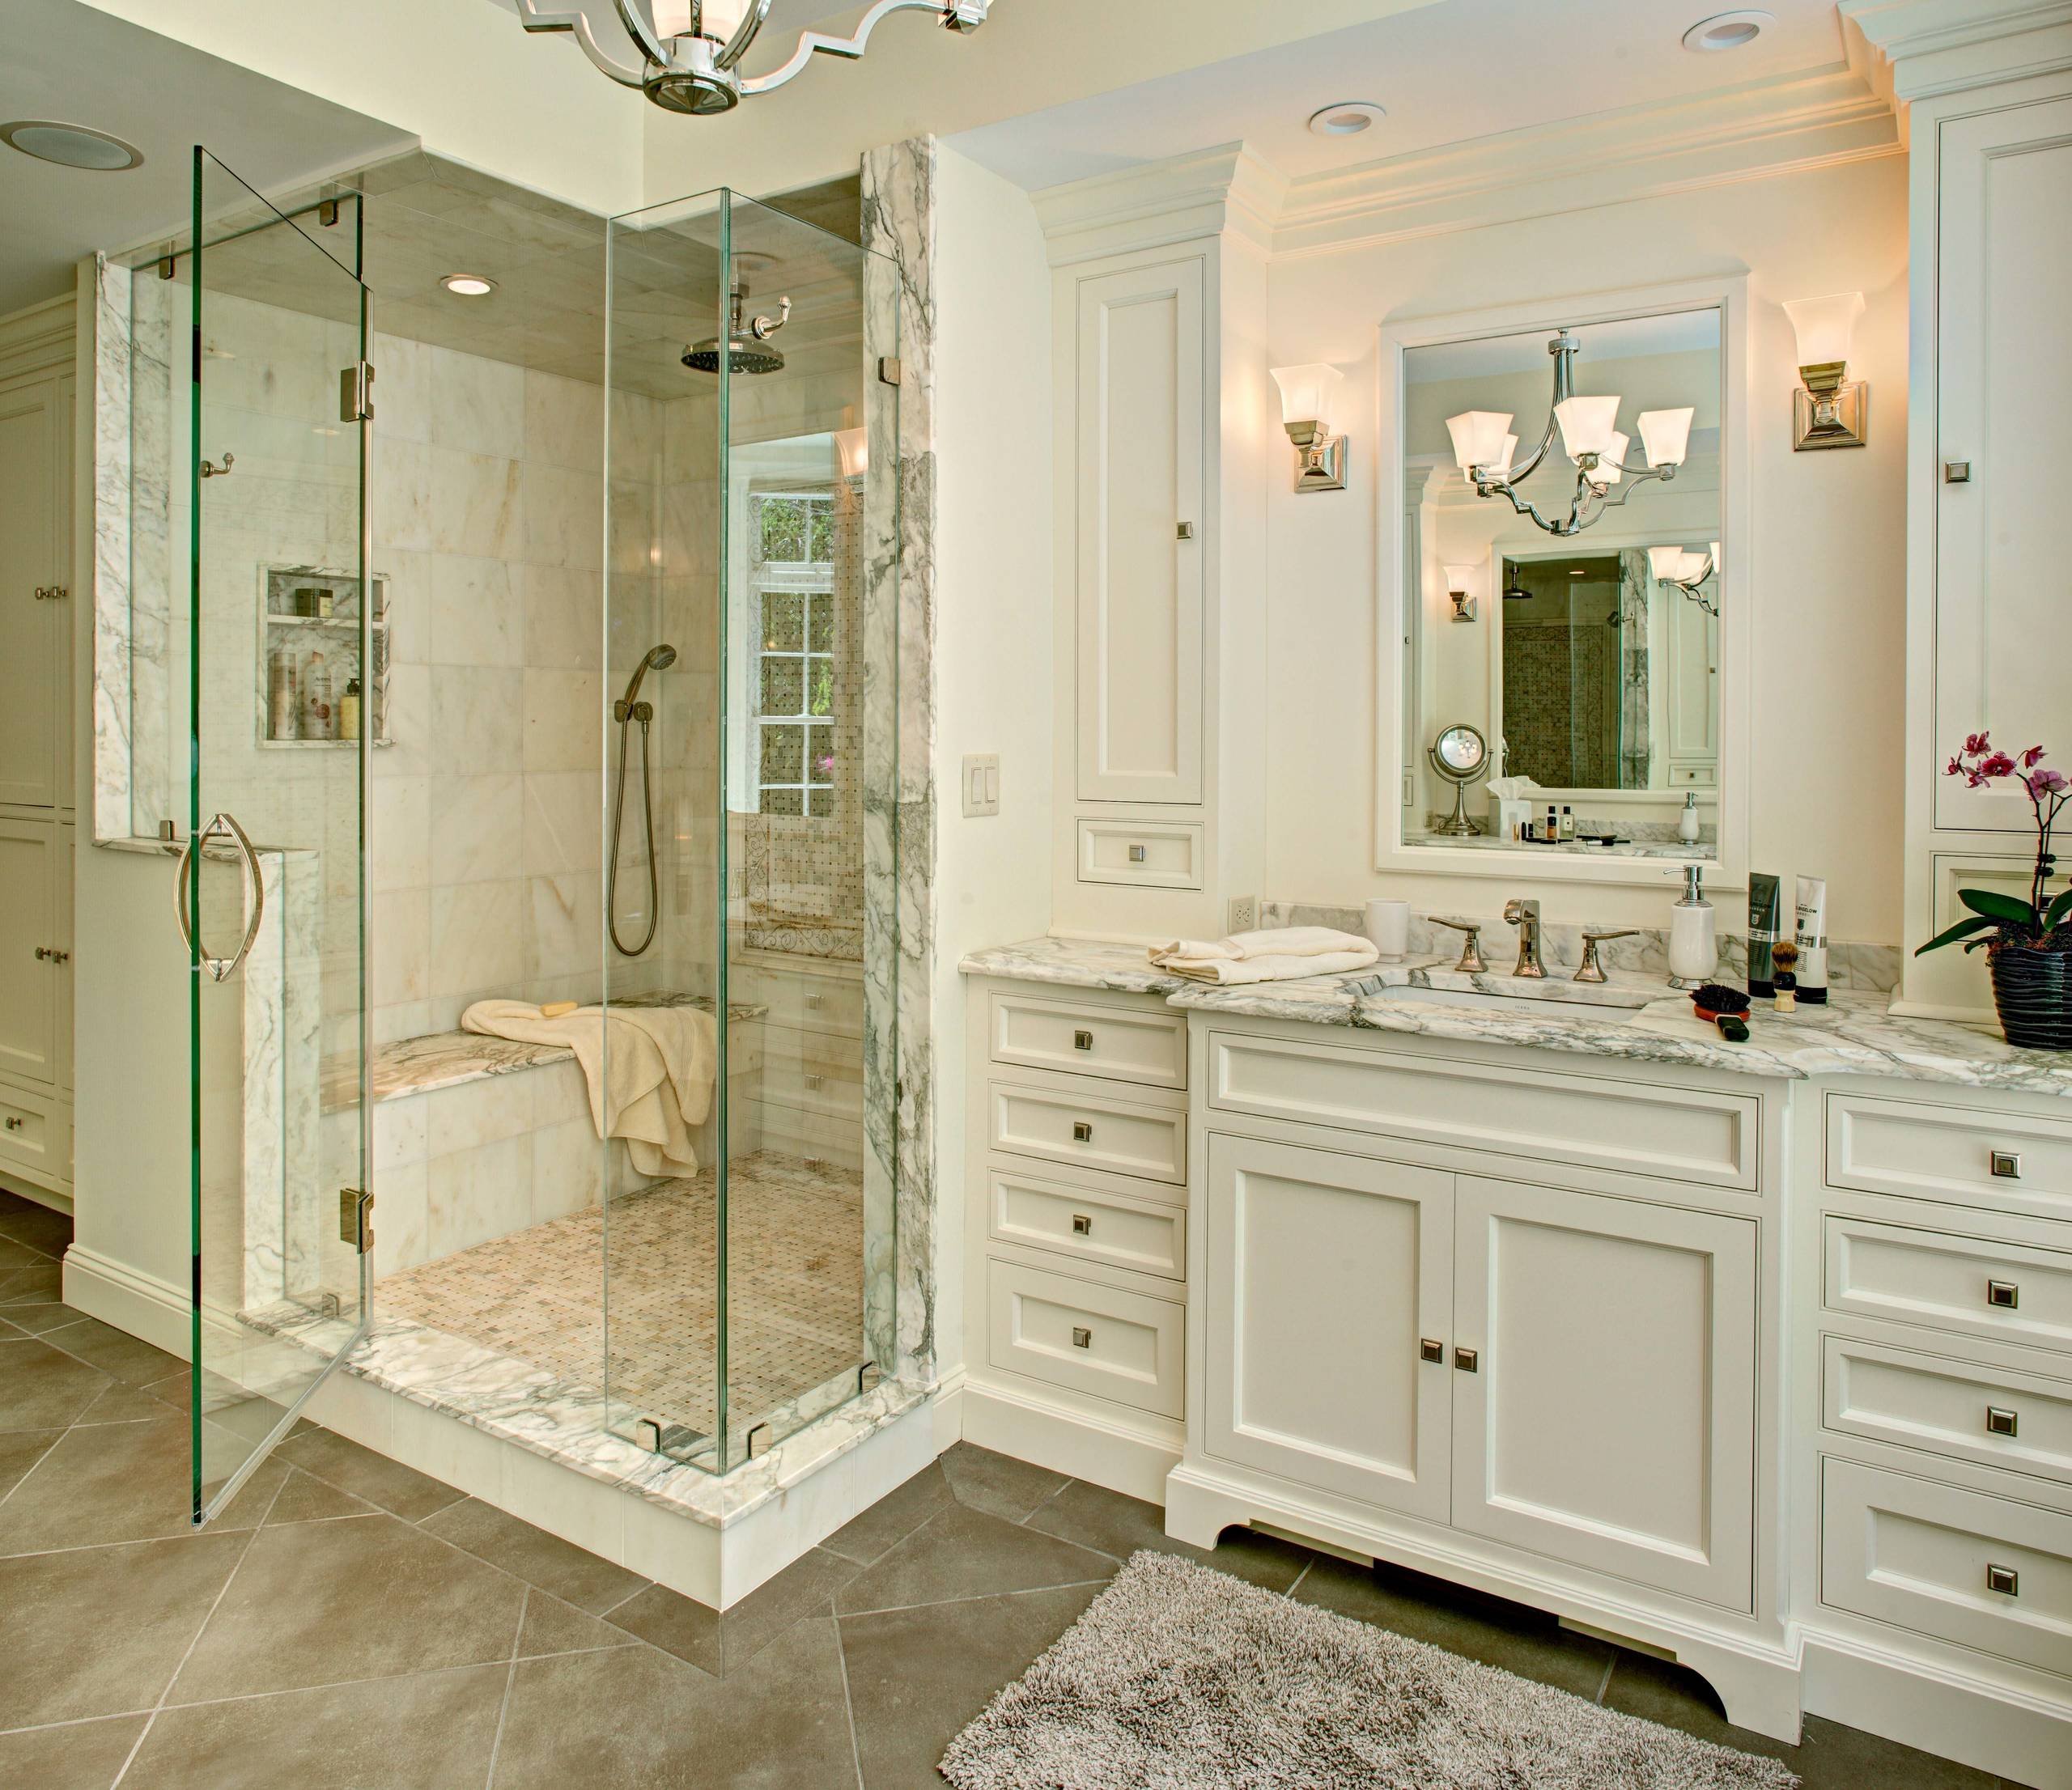 75 Beautiful White Tile Bathroom Pictures Ideas April 2021 Houzz